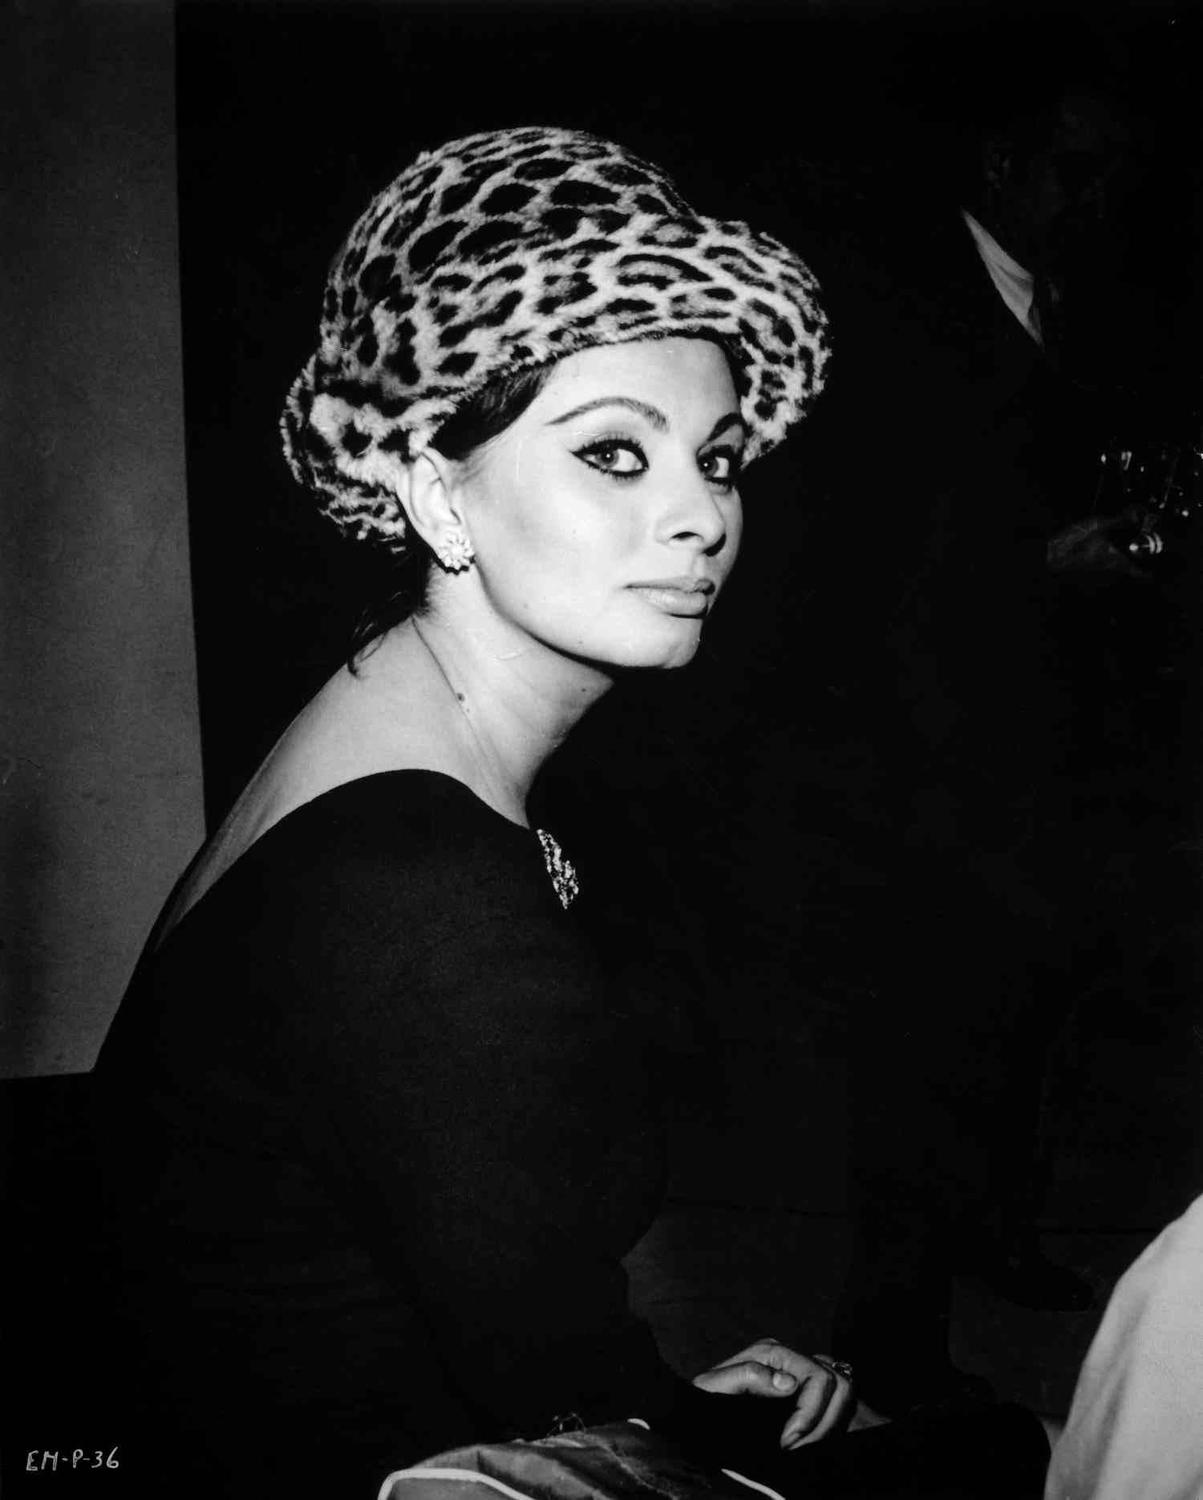 Unknown - Sophia Loren 1963 For Sale at 1stdibs